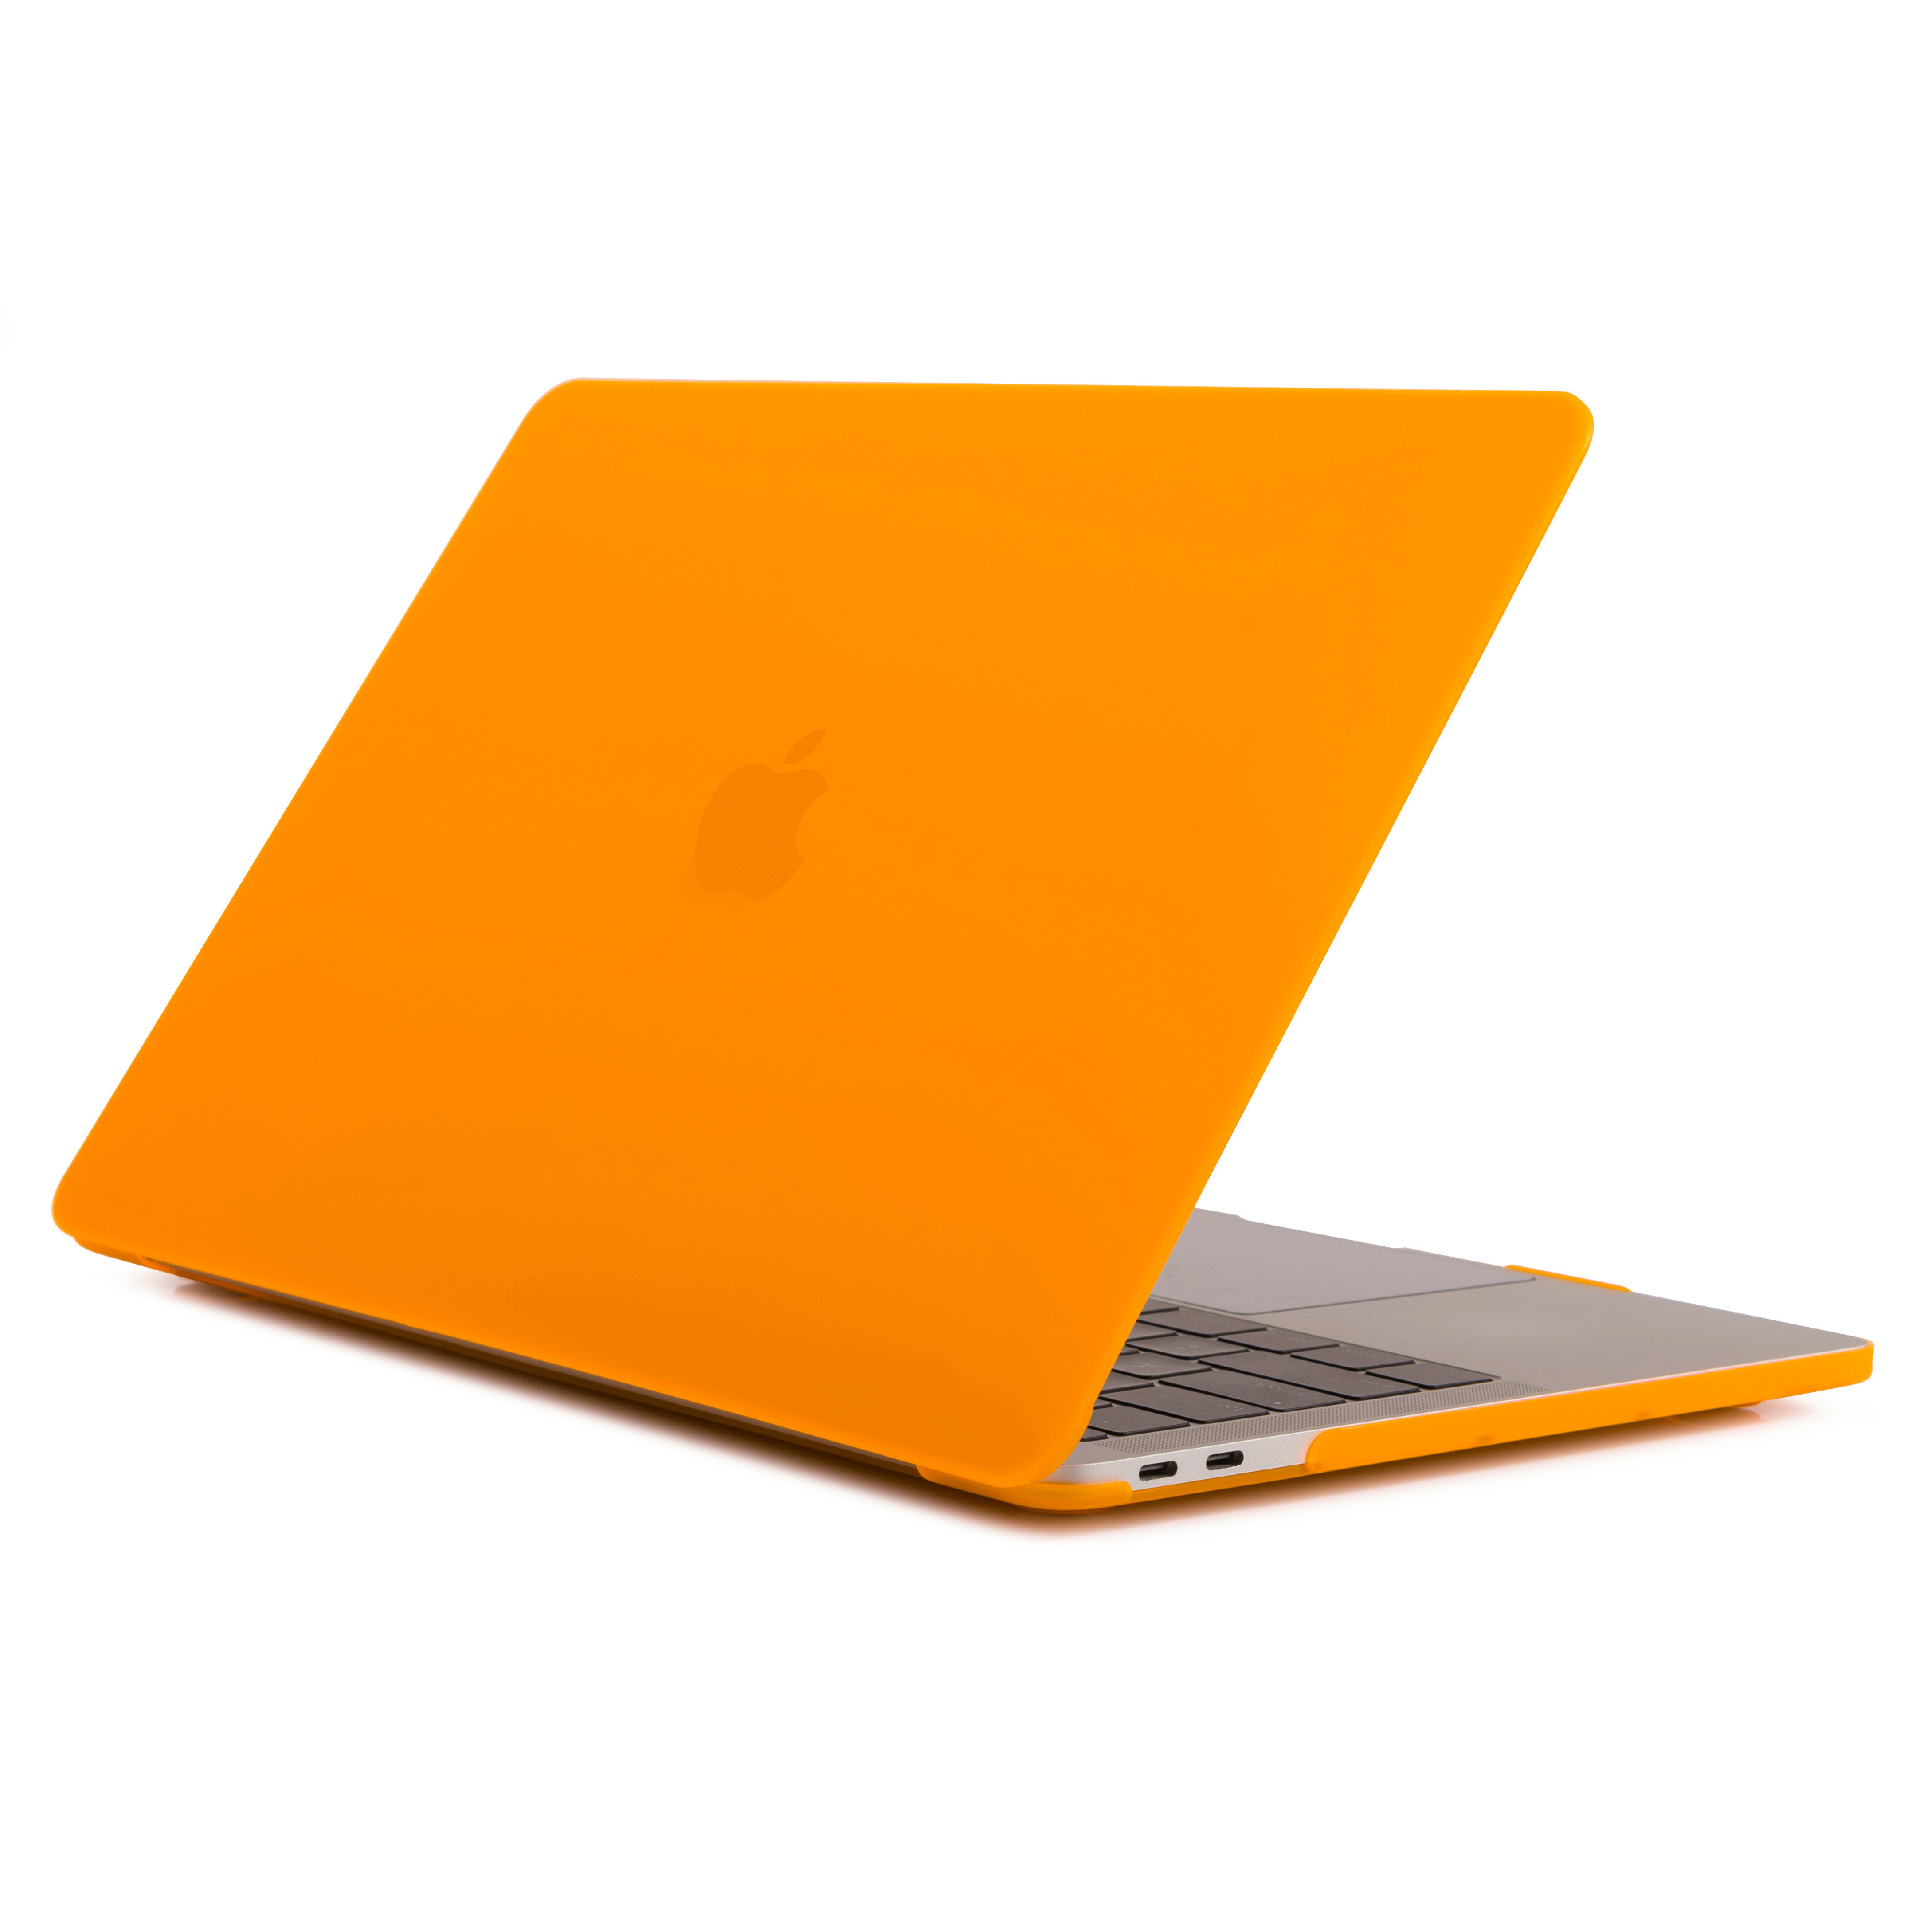 iPouzdro.cz pro MacBook Air 13 (2010-2017) 2222221001439 oranžová